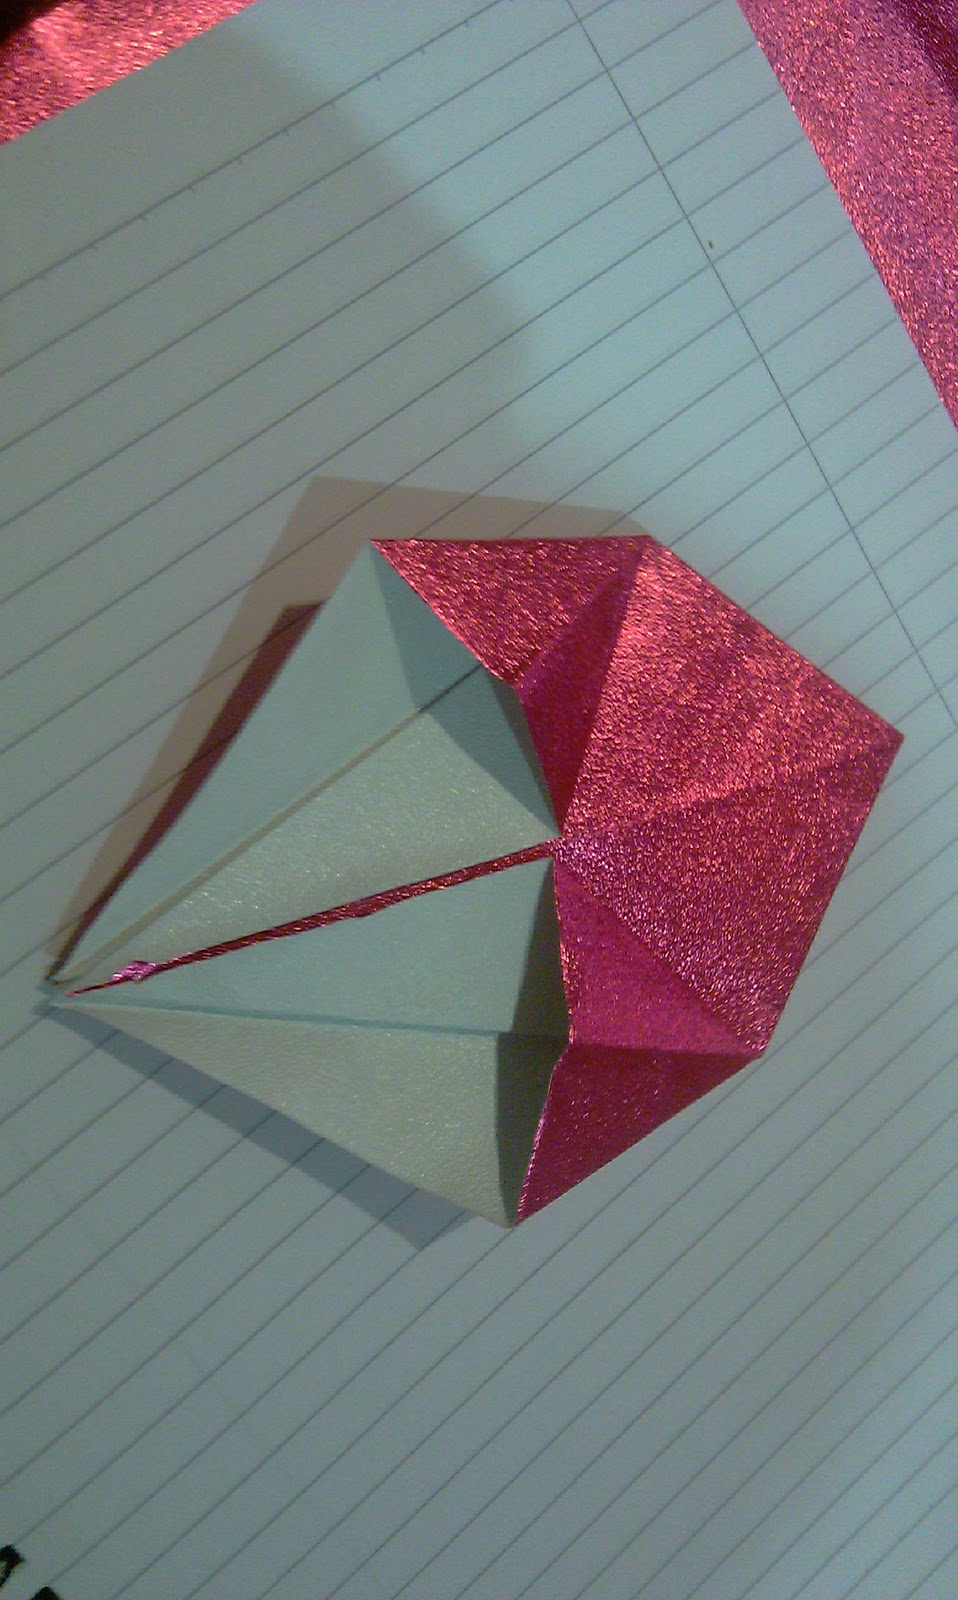  Cara  cara  Membuat  Origami  Kotak Bintang  Bahagia itu 